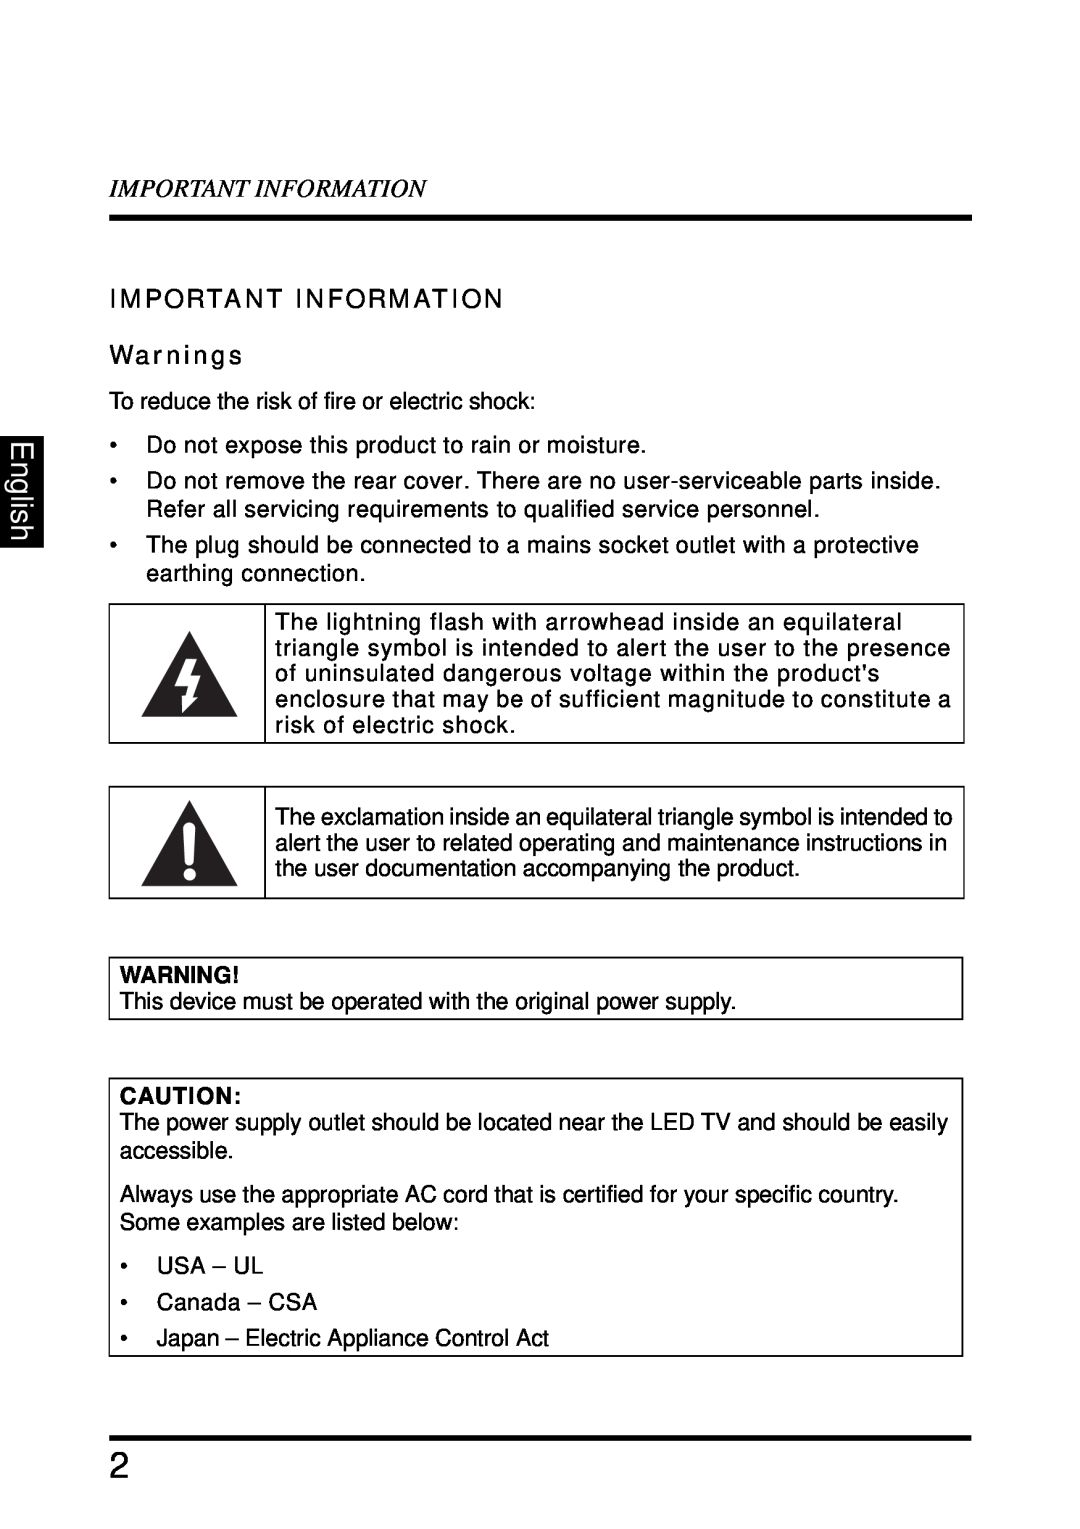 Westinghouse LD-4680 user manual English, Important Information, IMPORTANT INFORMATION Warnings 